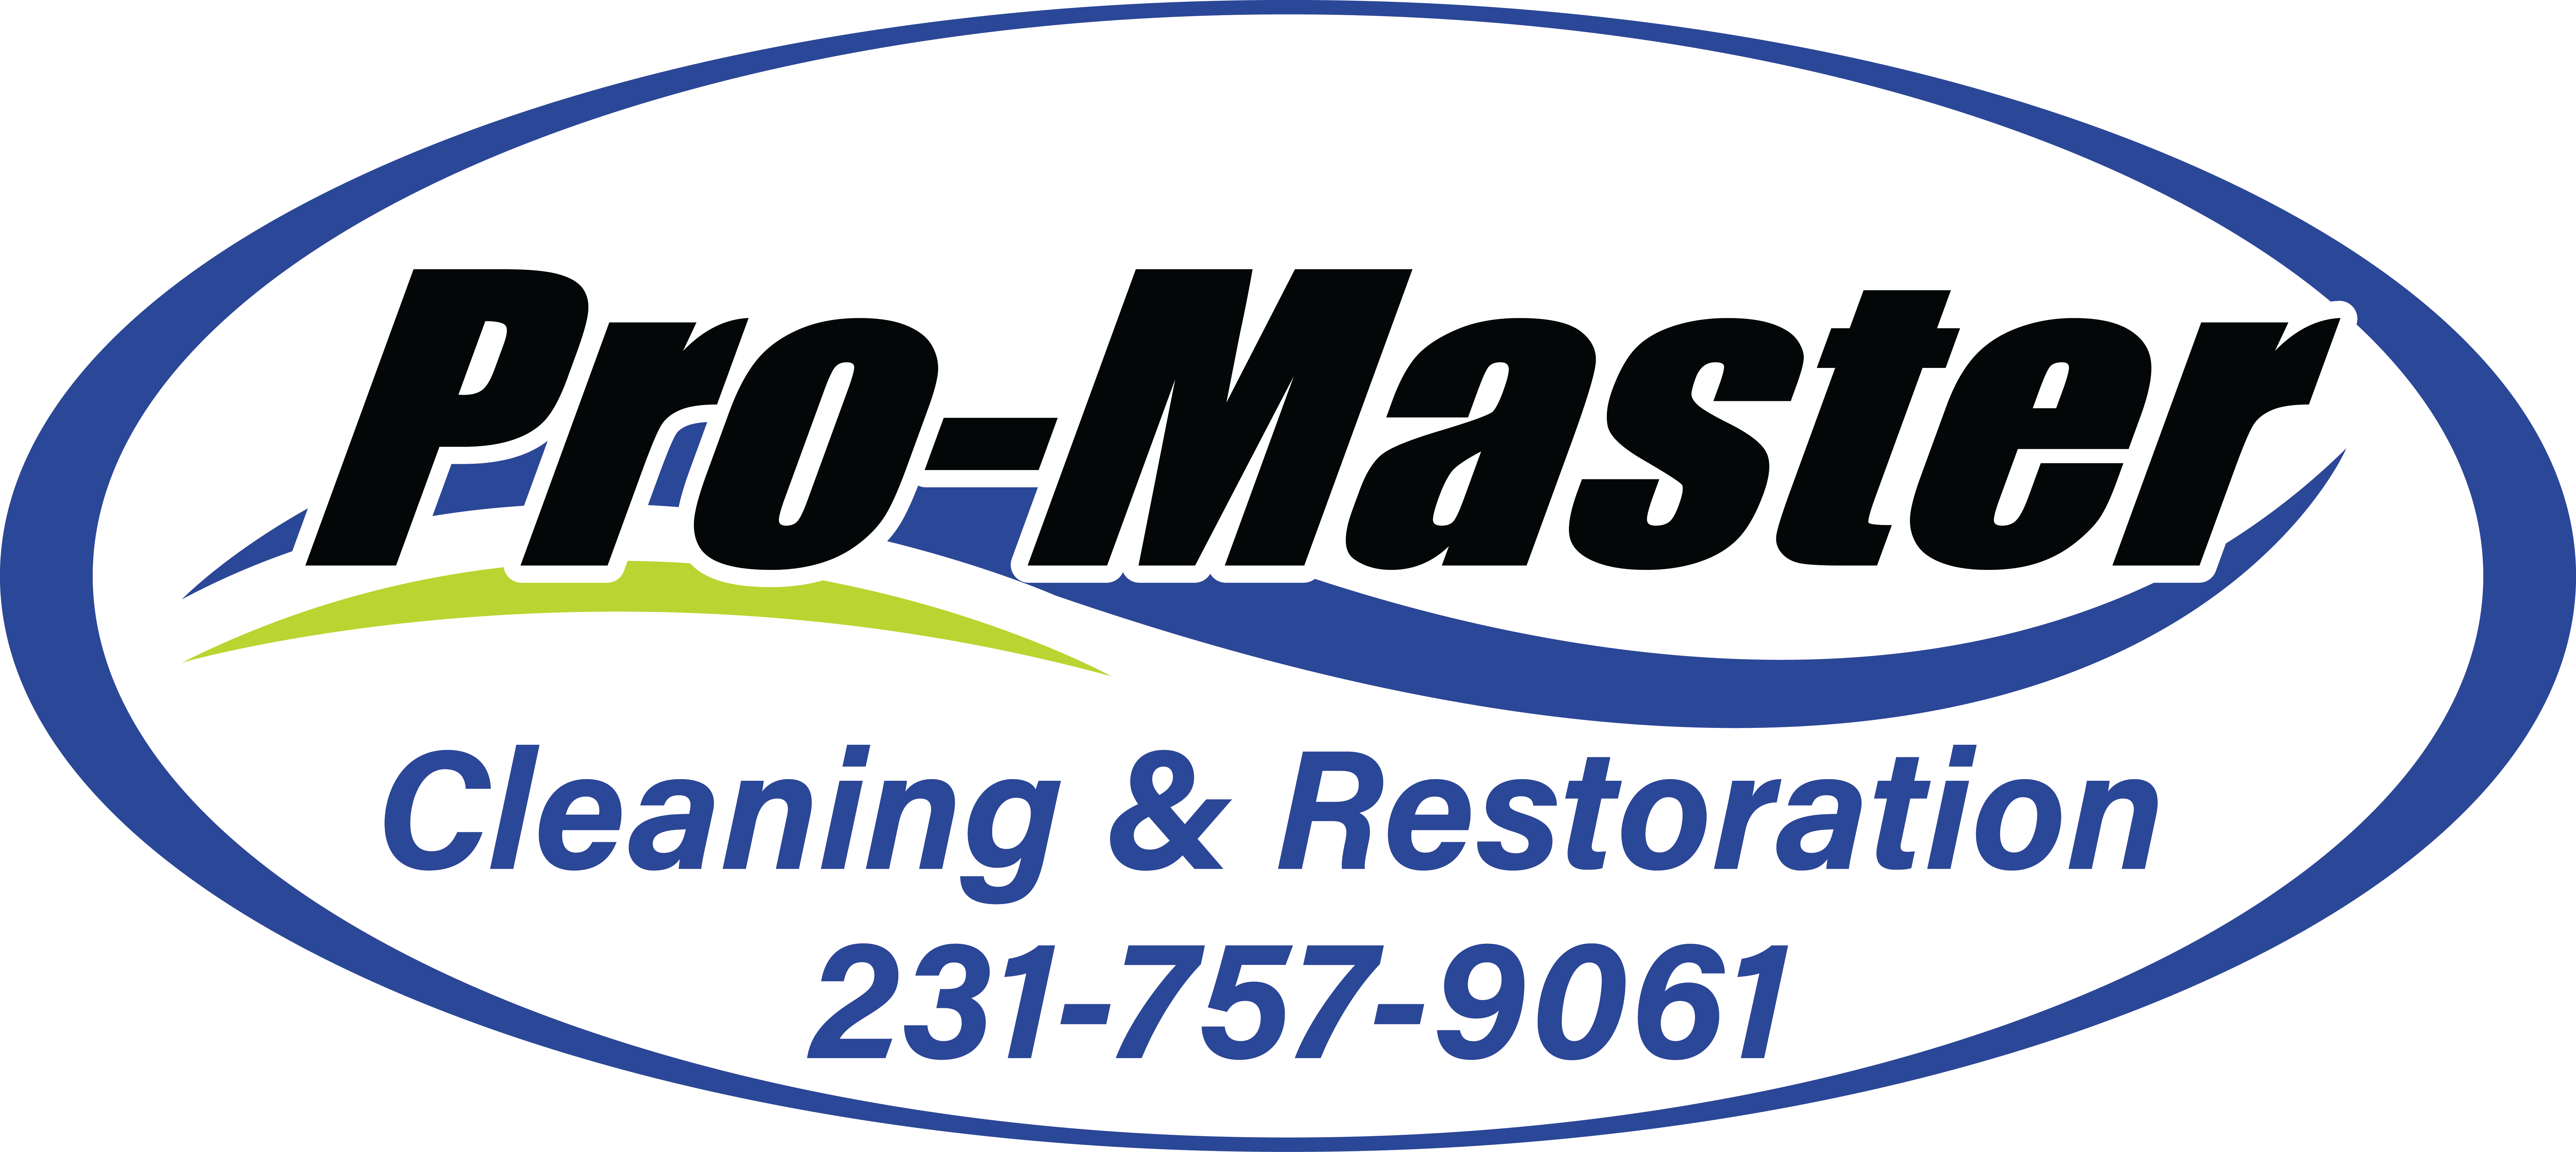 Promaster Cleaning & Restoration Logo